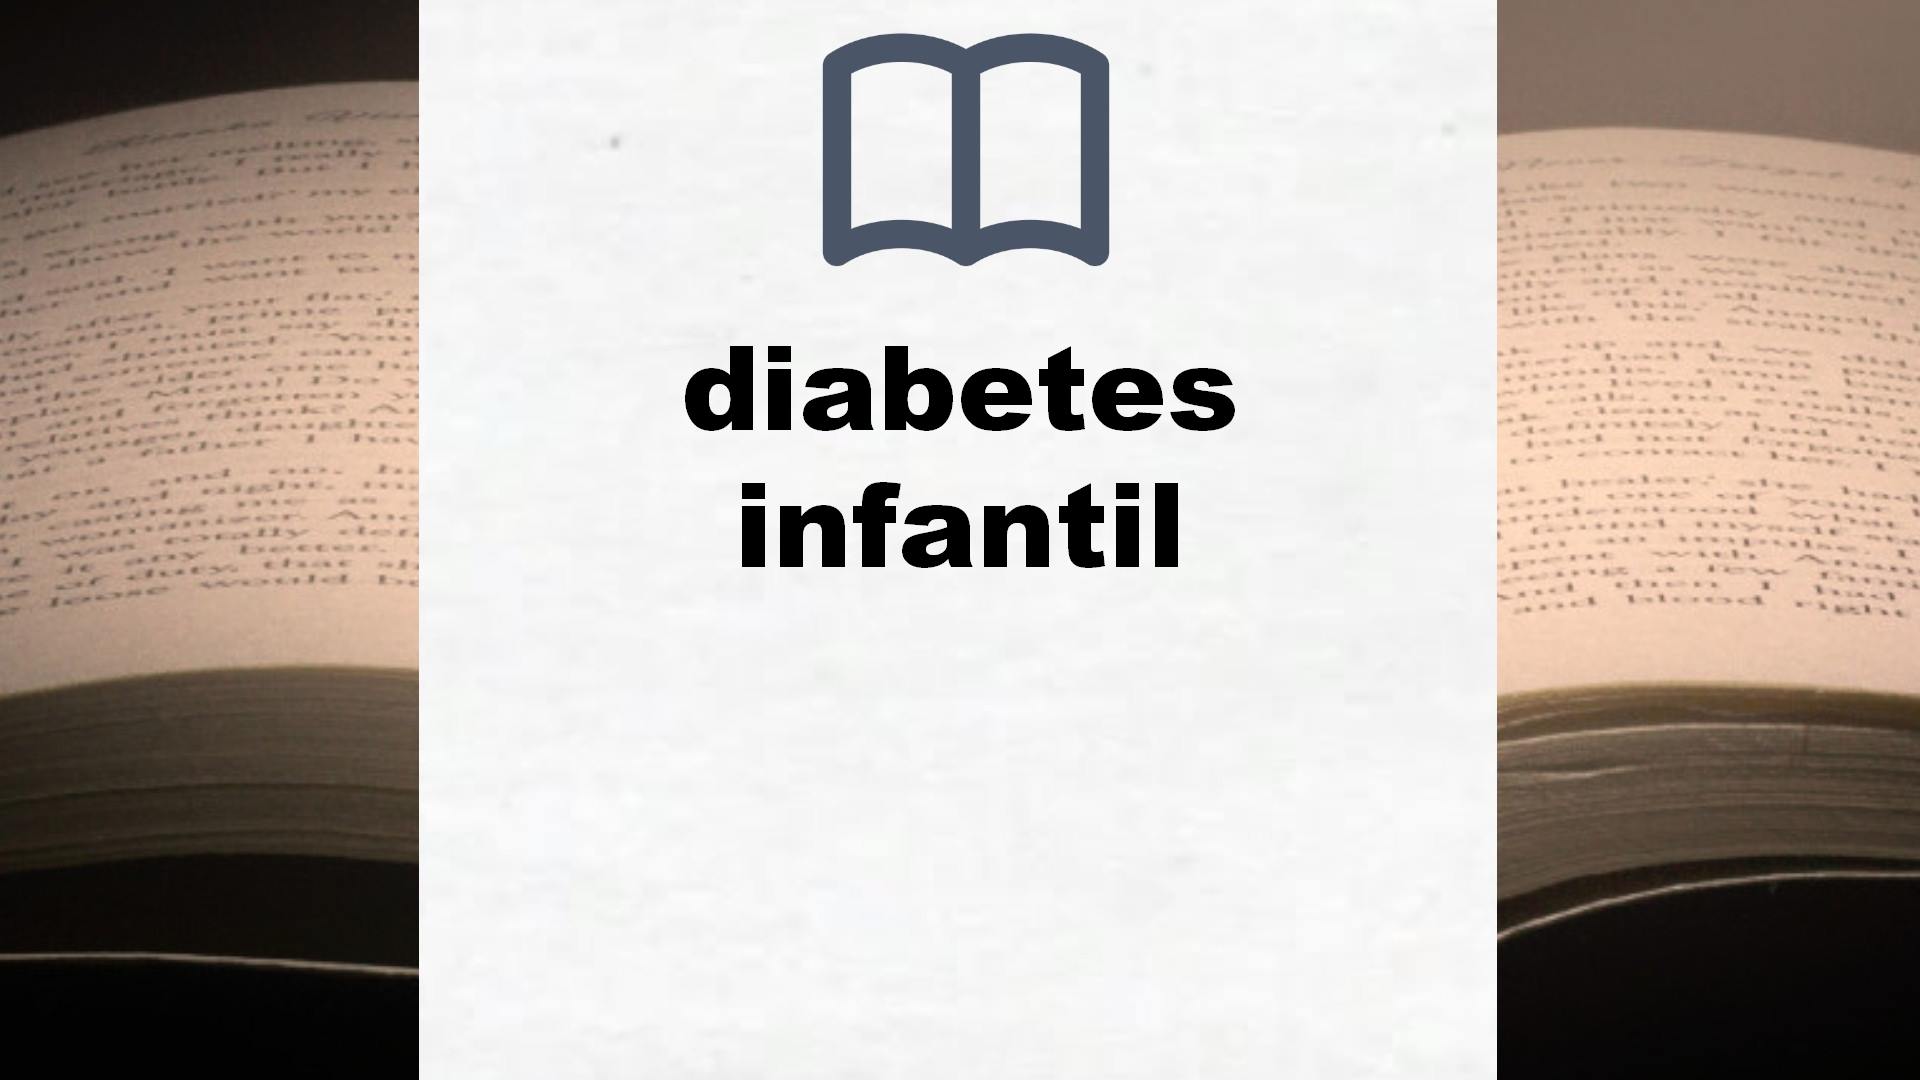 Libros sobre diabetes infantil